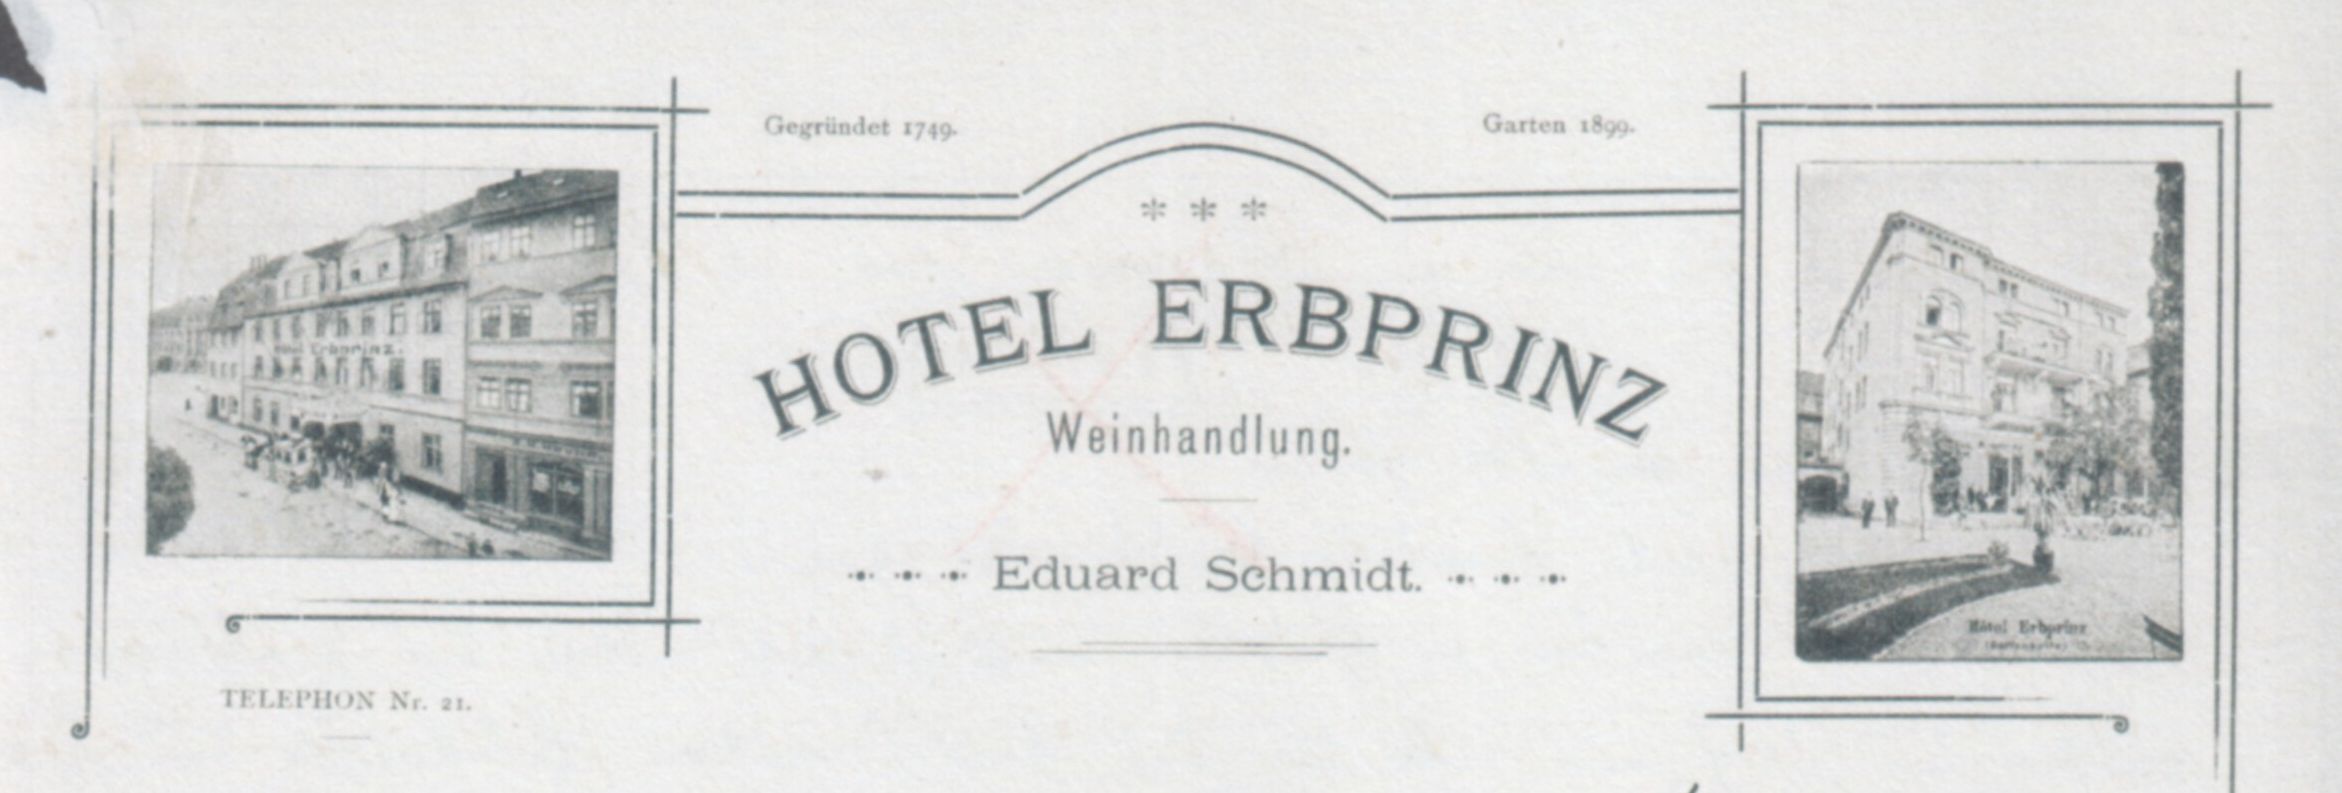 Briefkopf Hotel Erbprinz.jpg